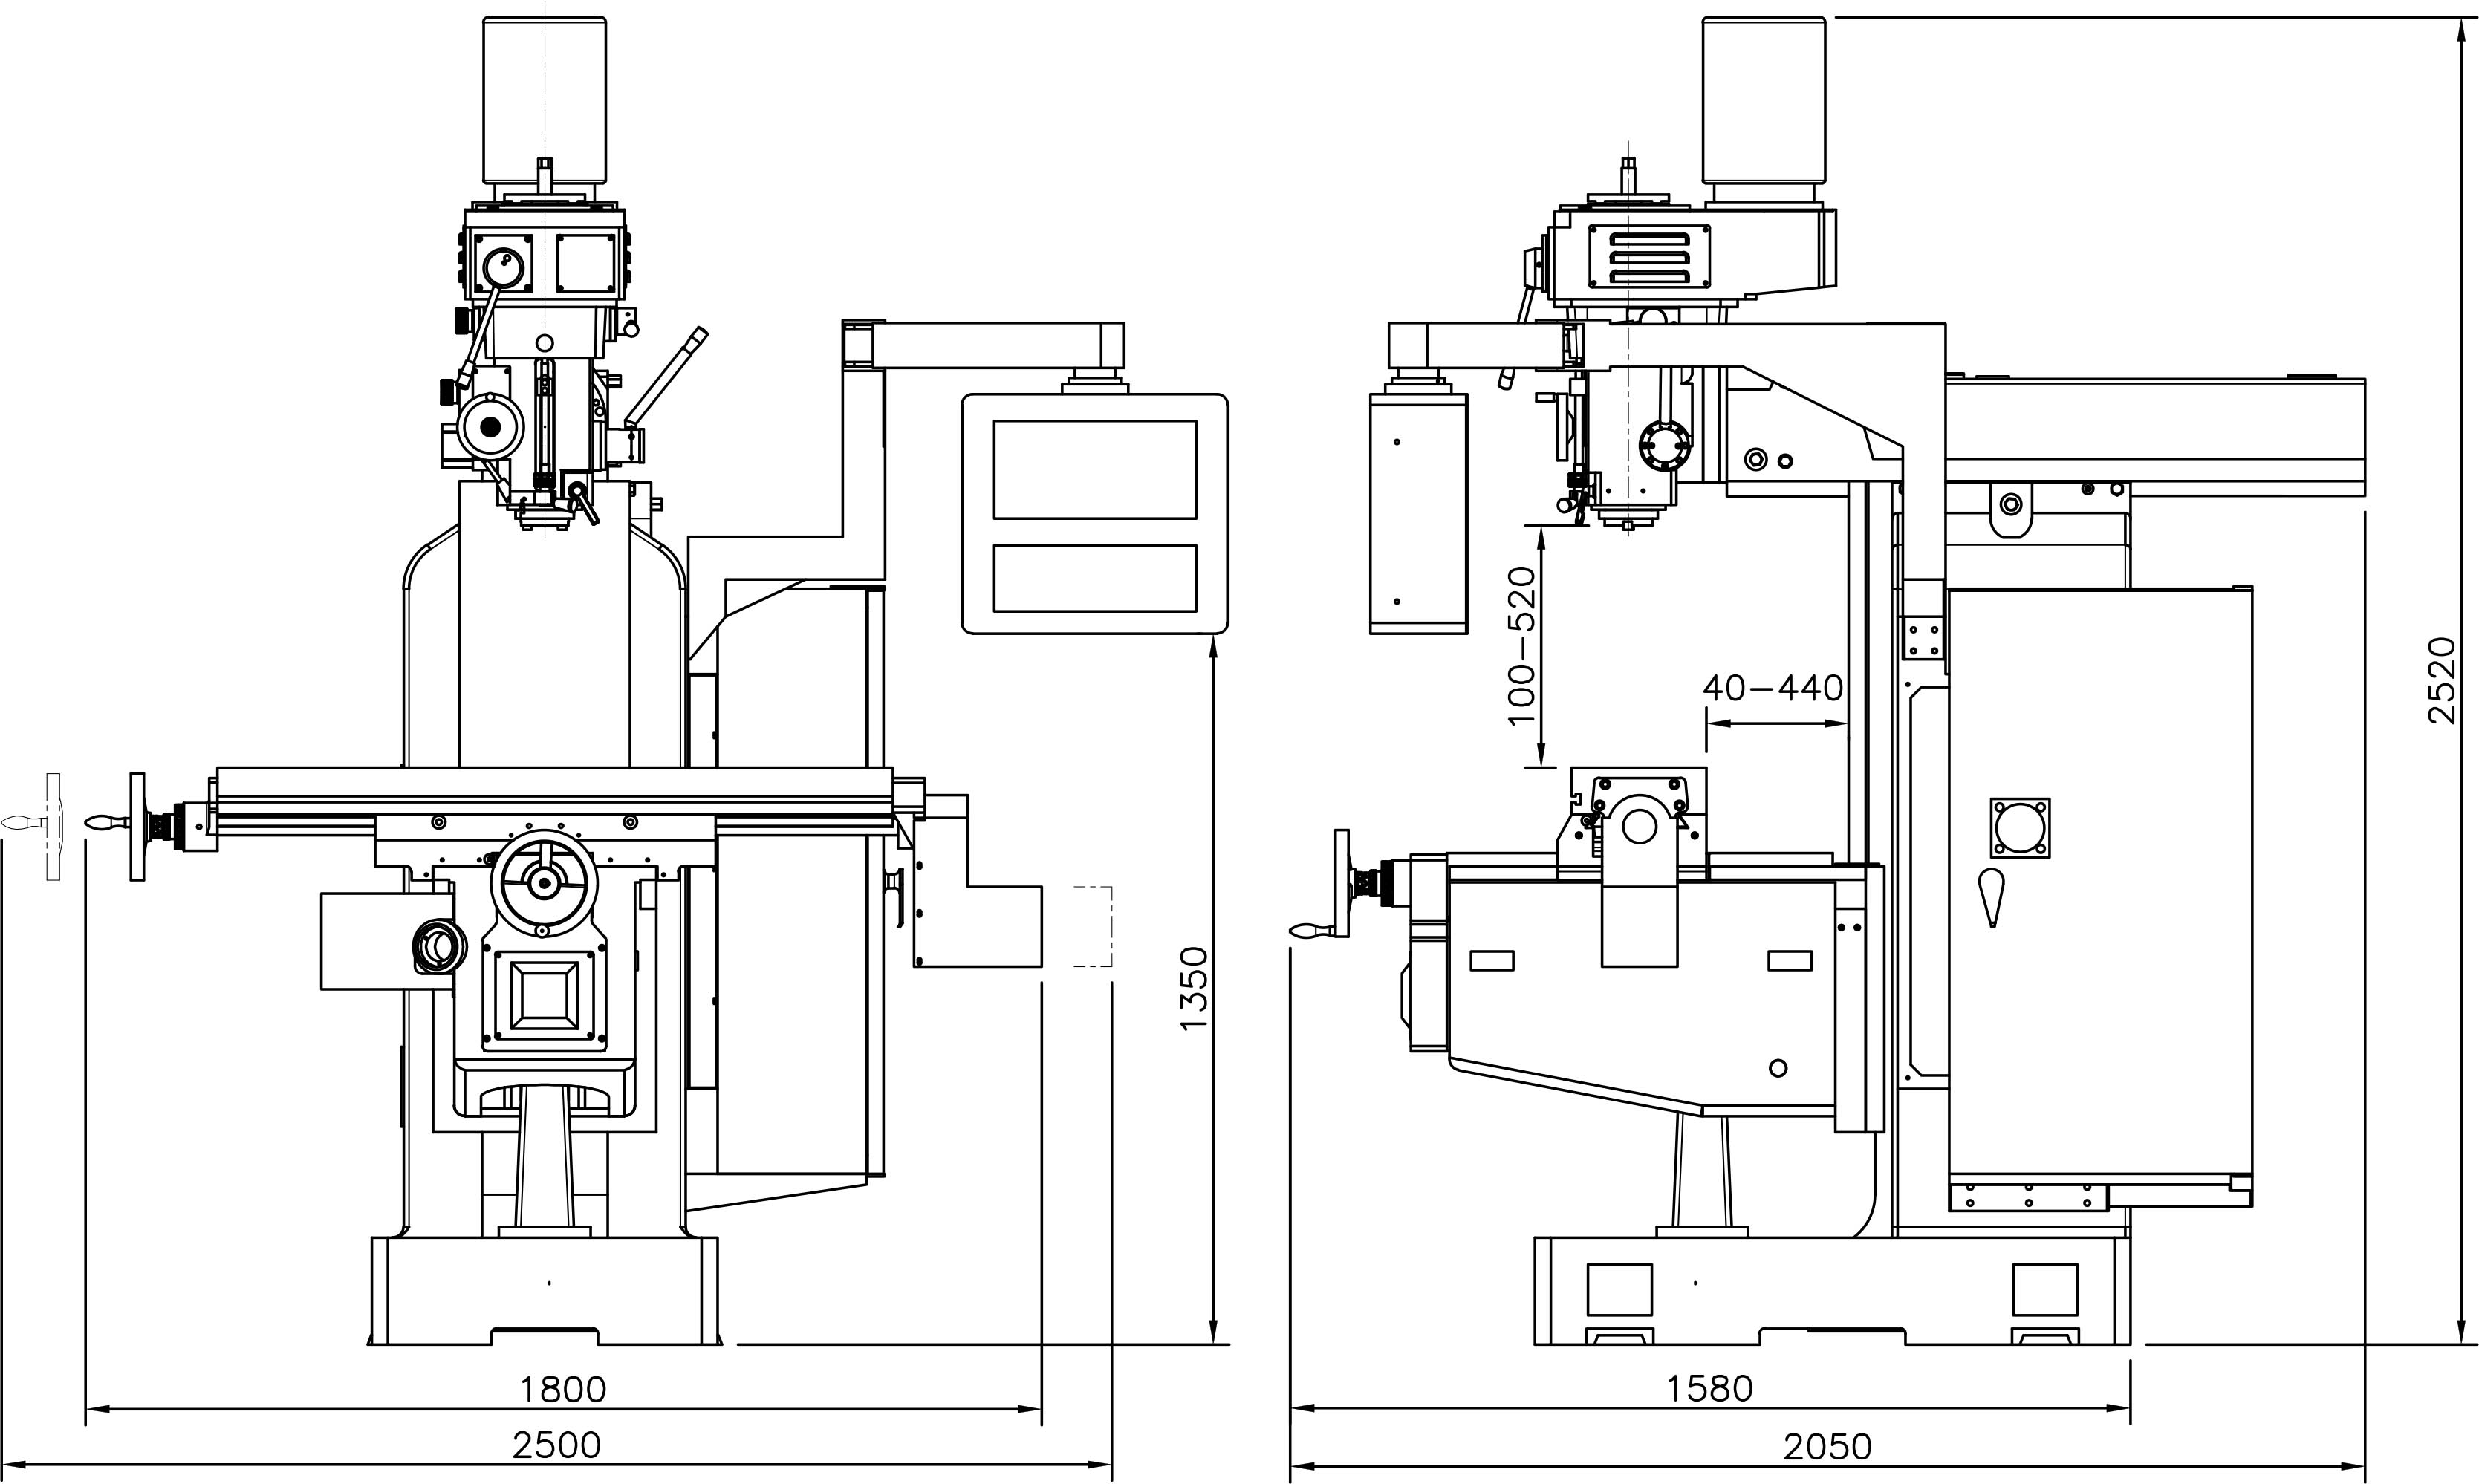 CNC Vertical Turret Milling Machine